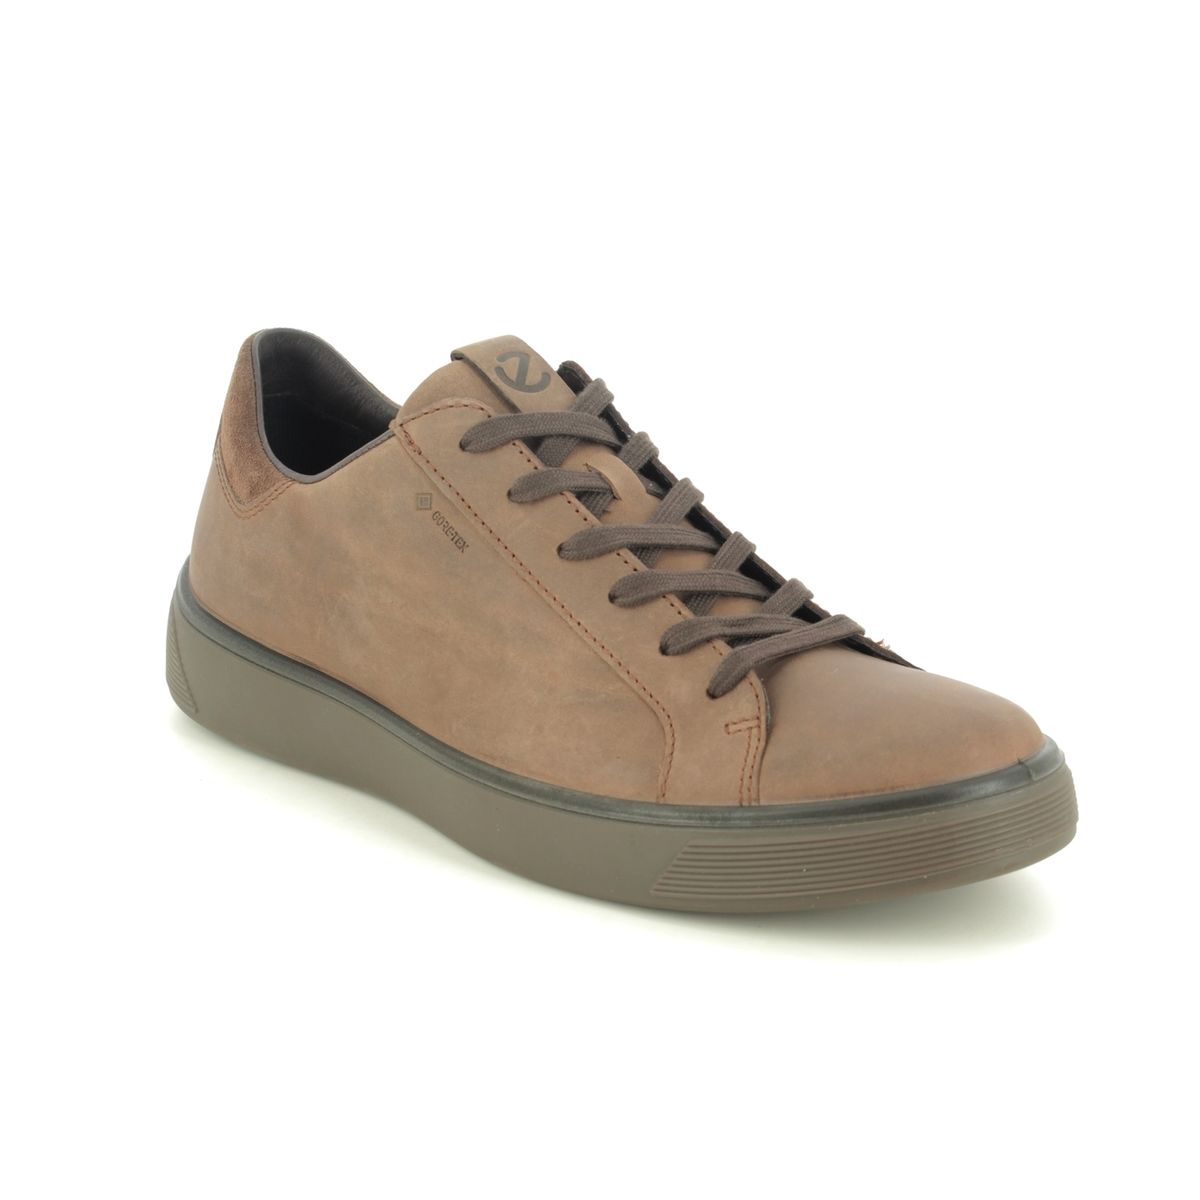 Ecco Street Tray Gtx Brown Nubuck Mens Comfort Shoes 504574-55778 In Size 43 In Plain Brown Nubuck